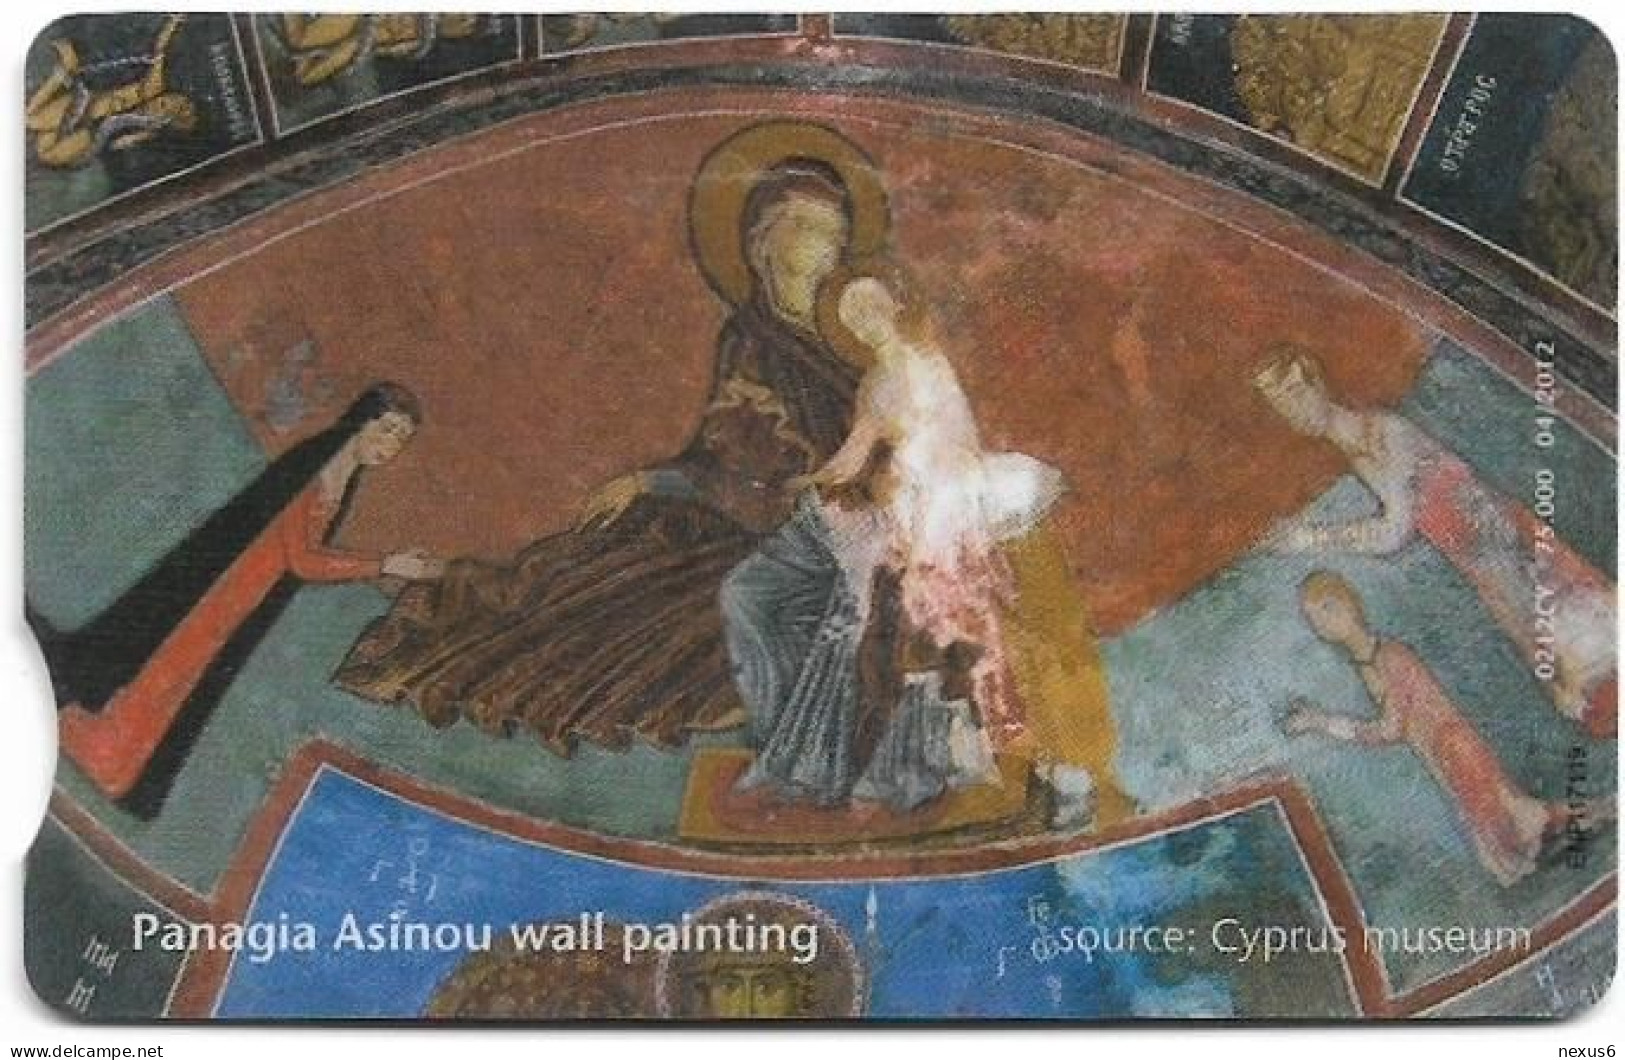 Cyprus - Cyta (Chip) - Unesco Heritage - Ancient Church In Asinou, 04.2012, 5€, 75.000ex, Used - Cyprus